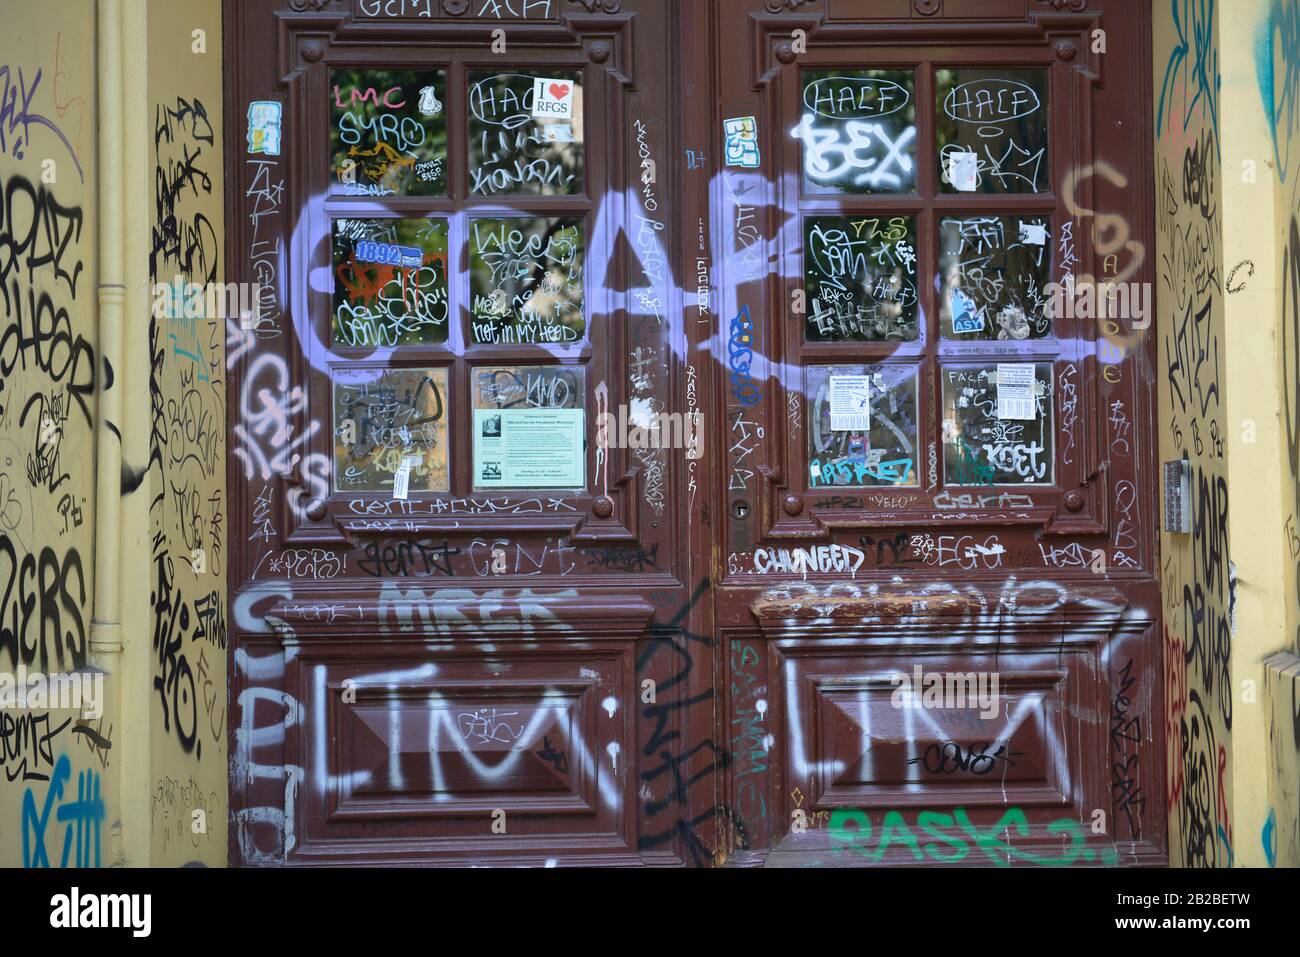 Graffiti, Eingangstuer, Gneisenaustrasse, Kreuzberg, Berlin, Deutschland Stock Photo